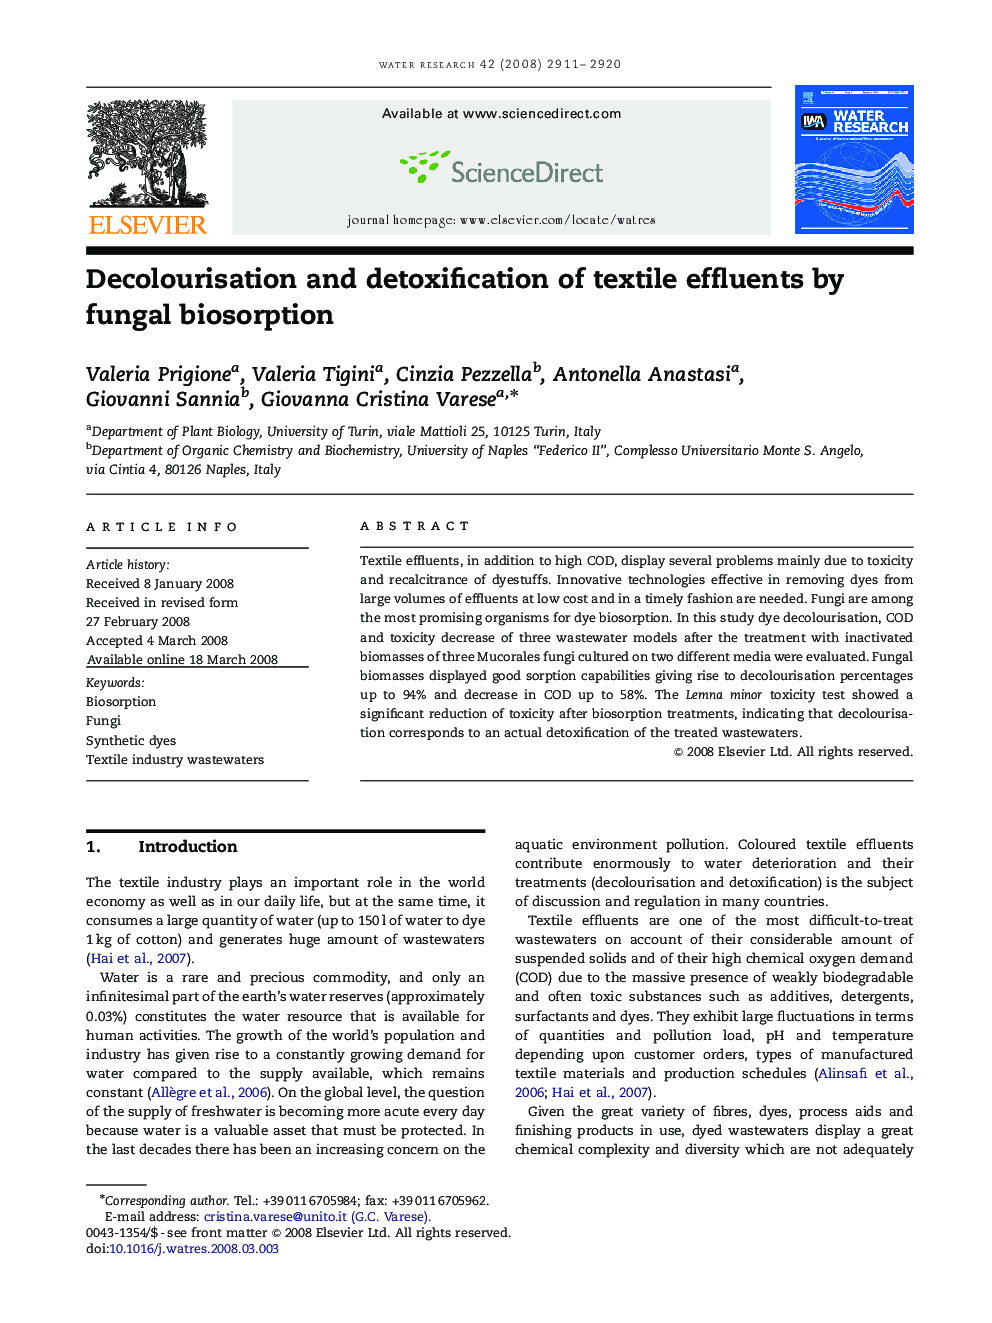 Decolourisation and detoxification of textile effluents by fungal biosorption